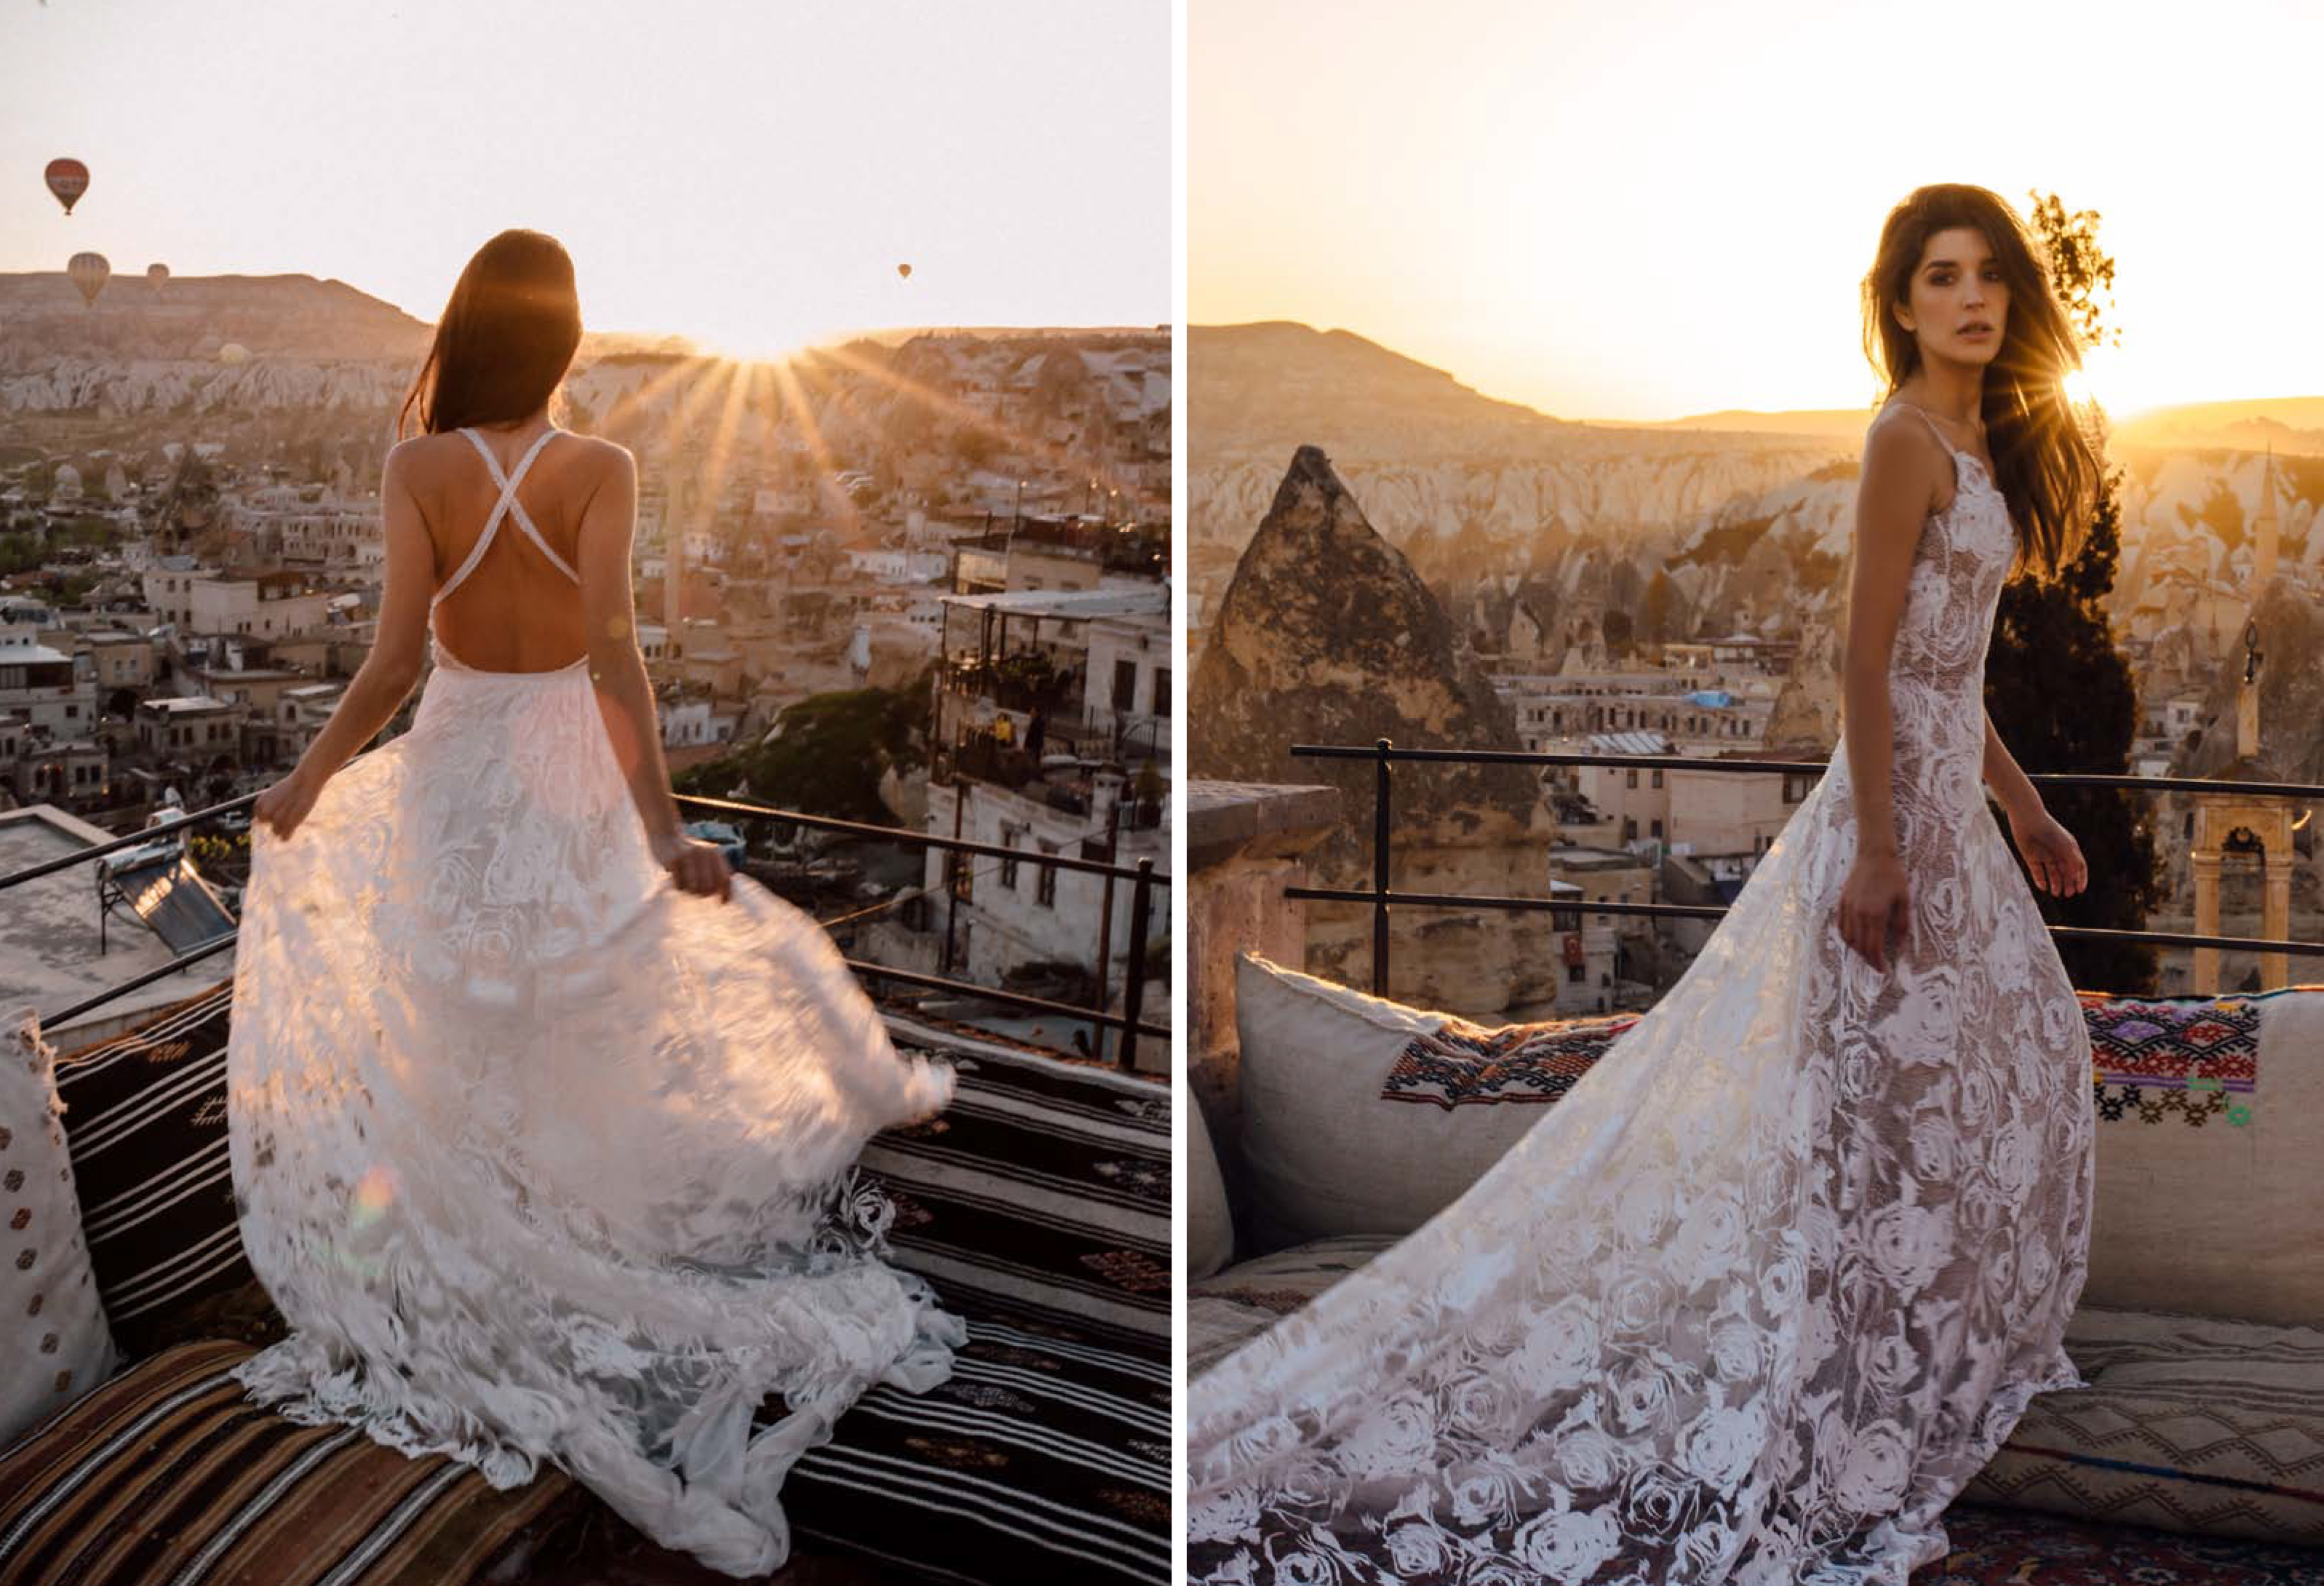 Cappadocia Wedding Photography Workshop by Tali Photograpyhy